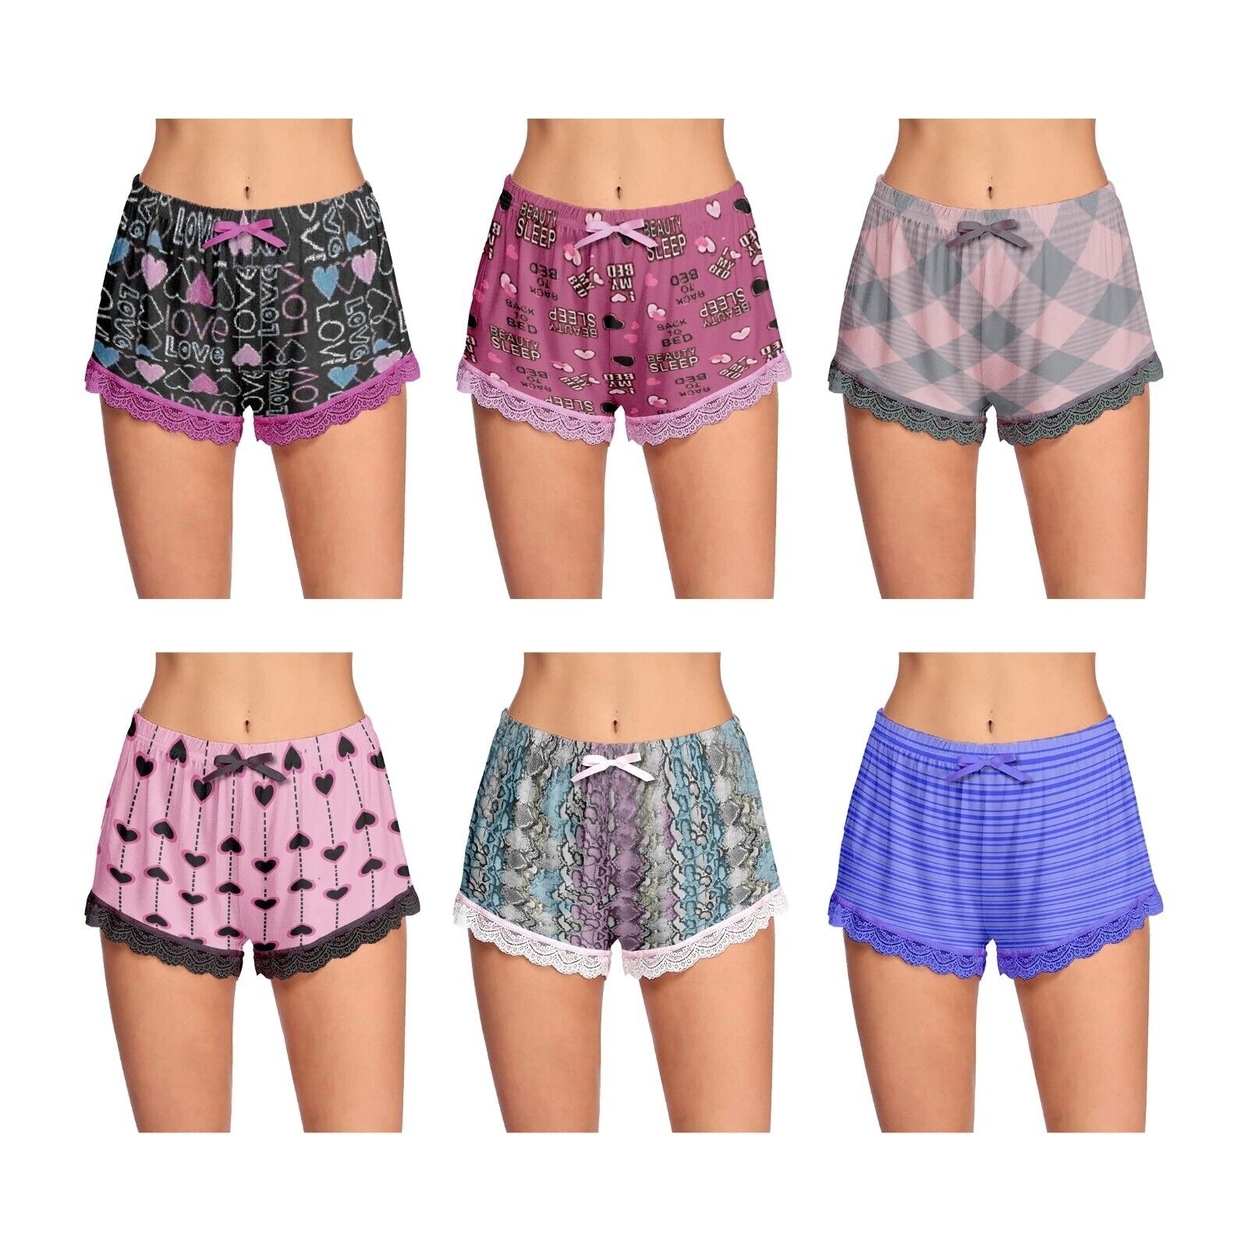 4-Pack: Women's Ultra-Soft Cozy Fun Printed Lace Trim Pajama Lounge Shorts - Medium, Animal